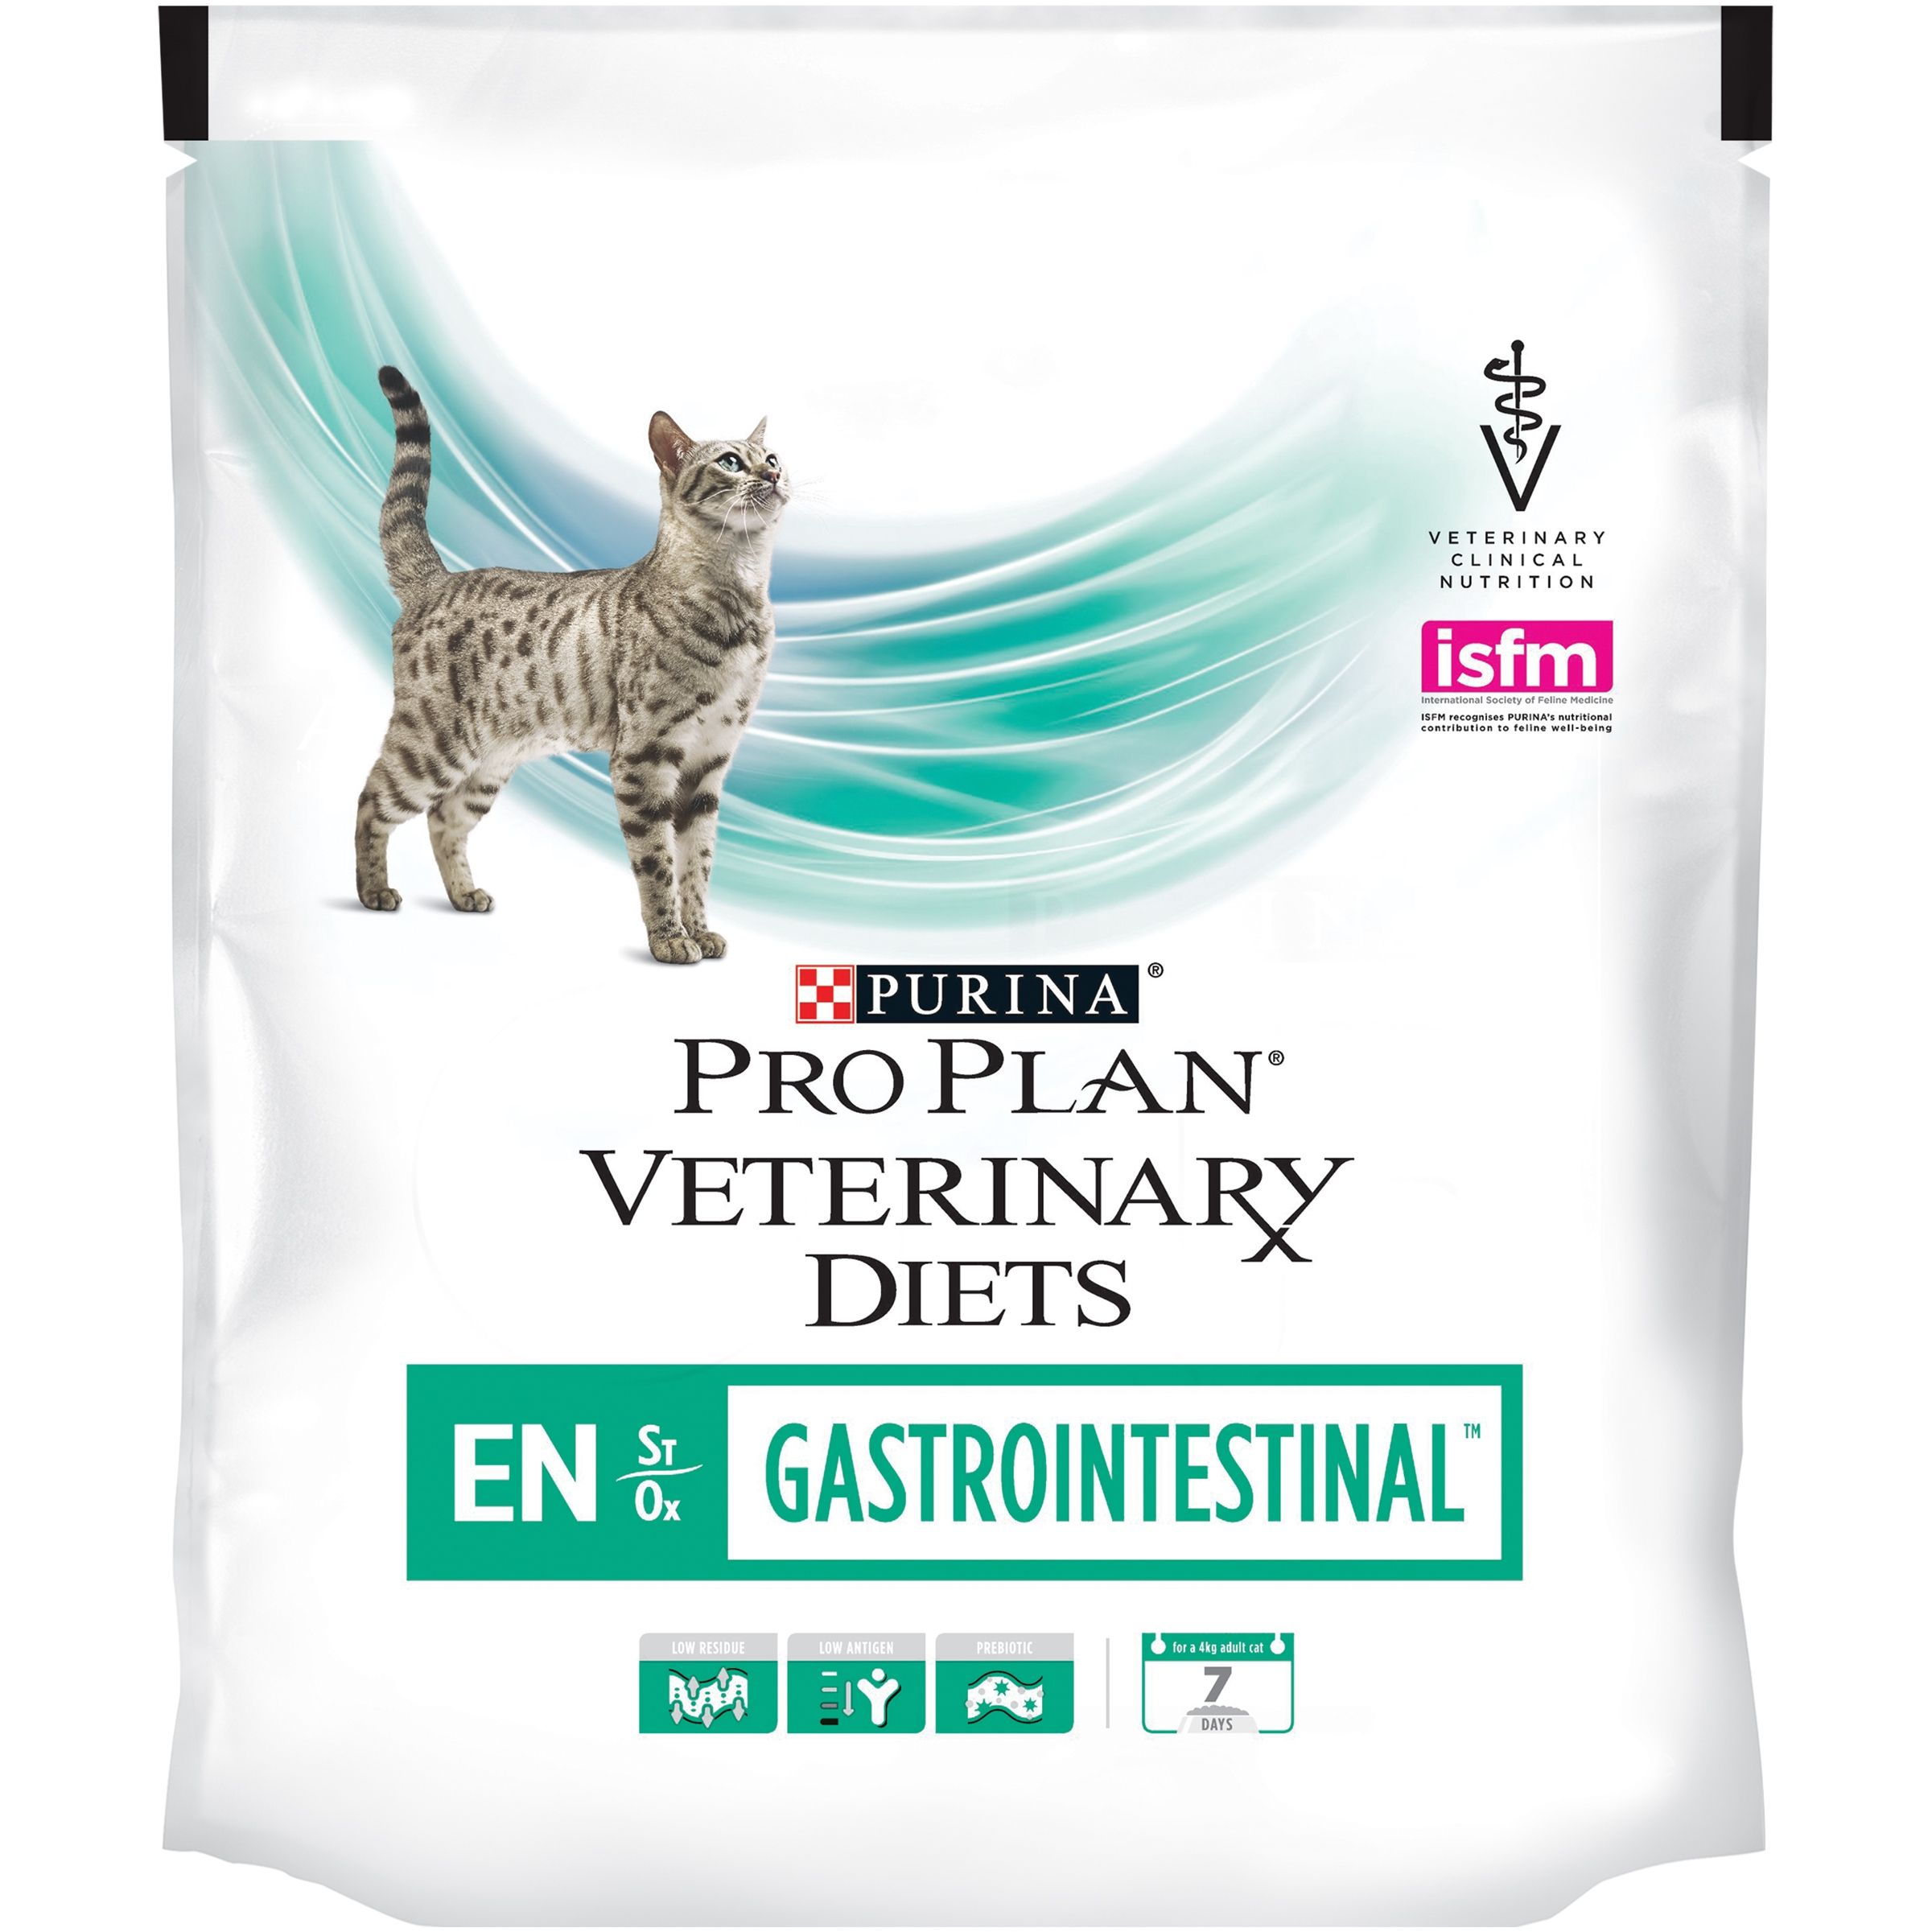 Pro Plan Veterinary Diets EN Gastrointestinal 